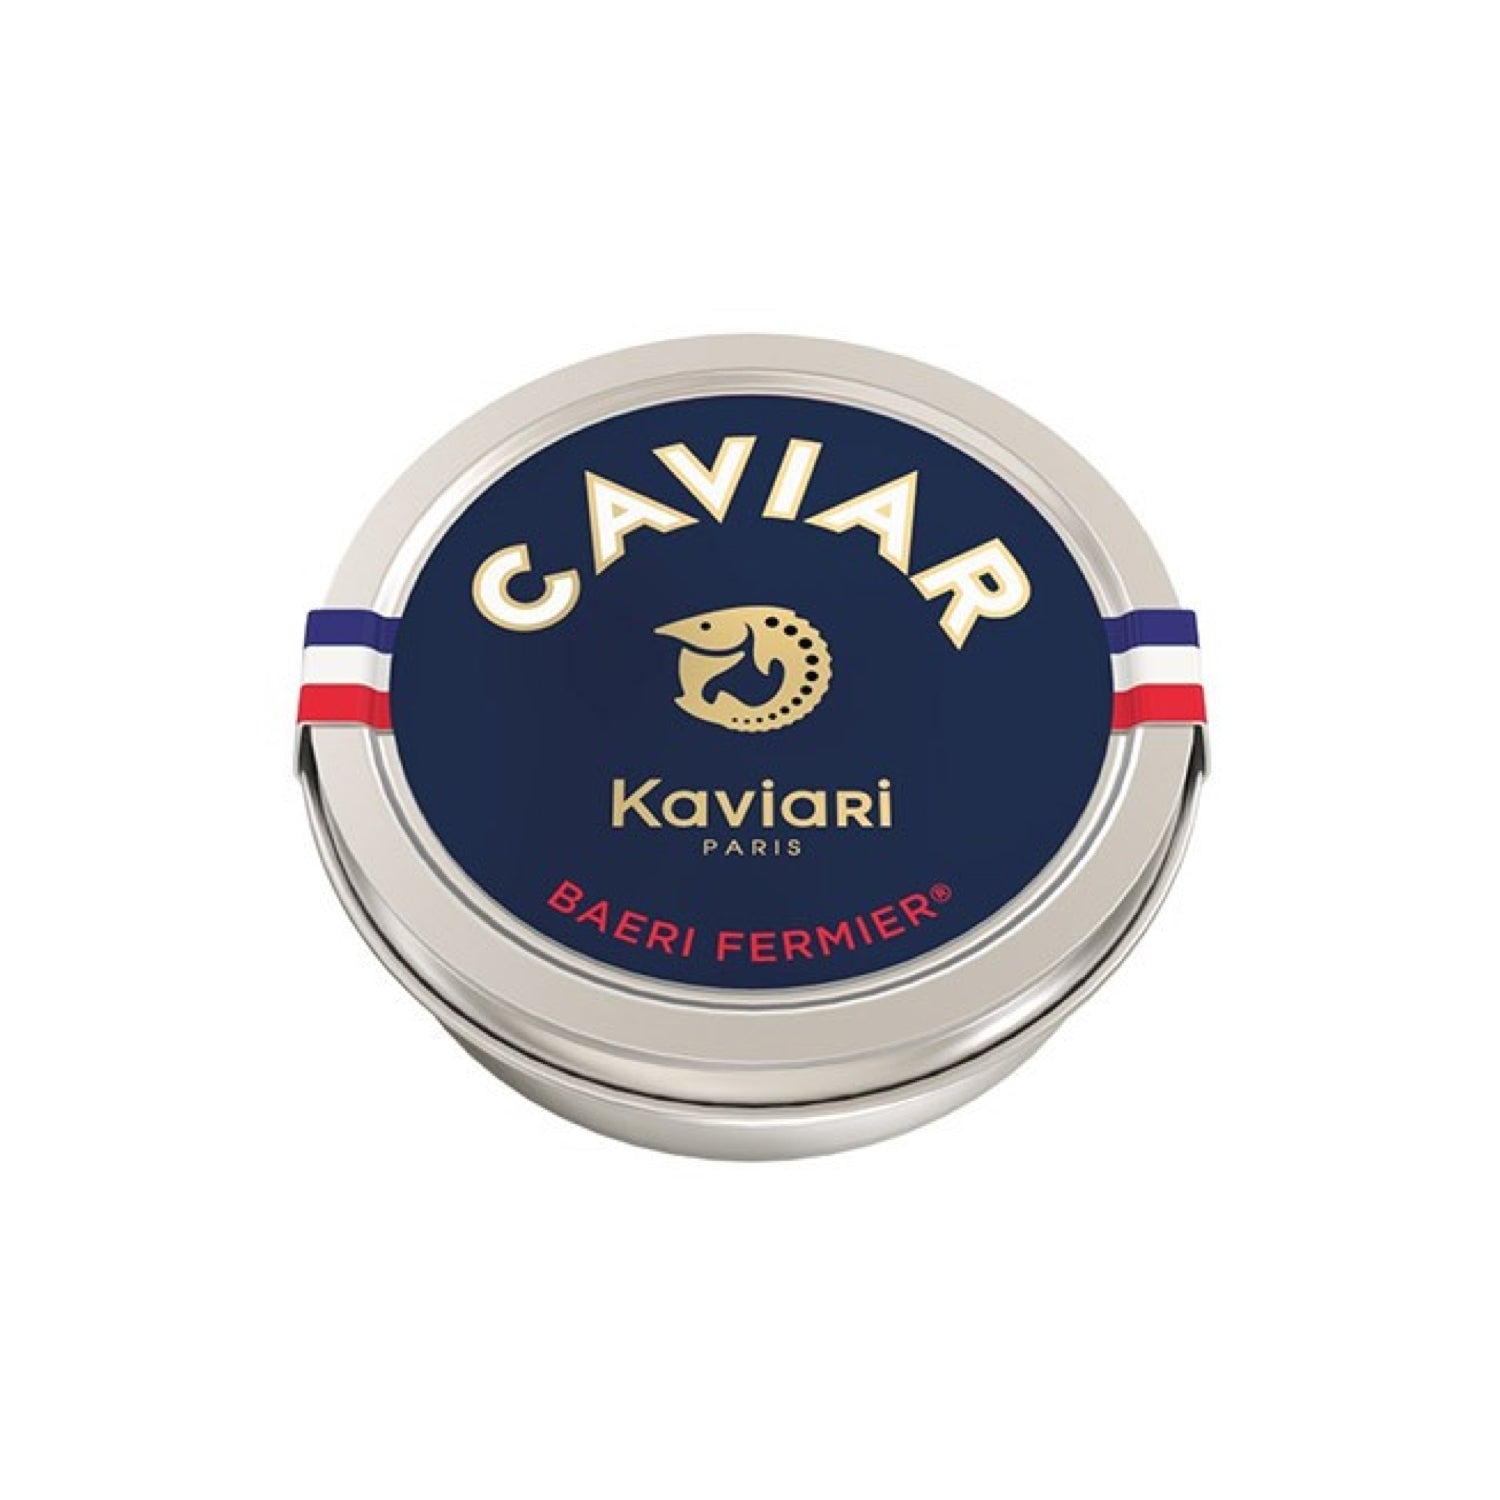 Caviar Baeri Fermier [30g]